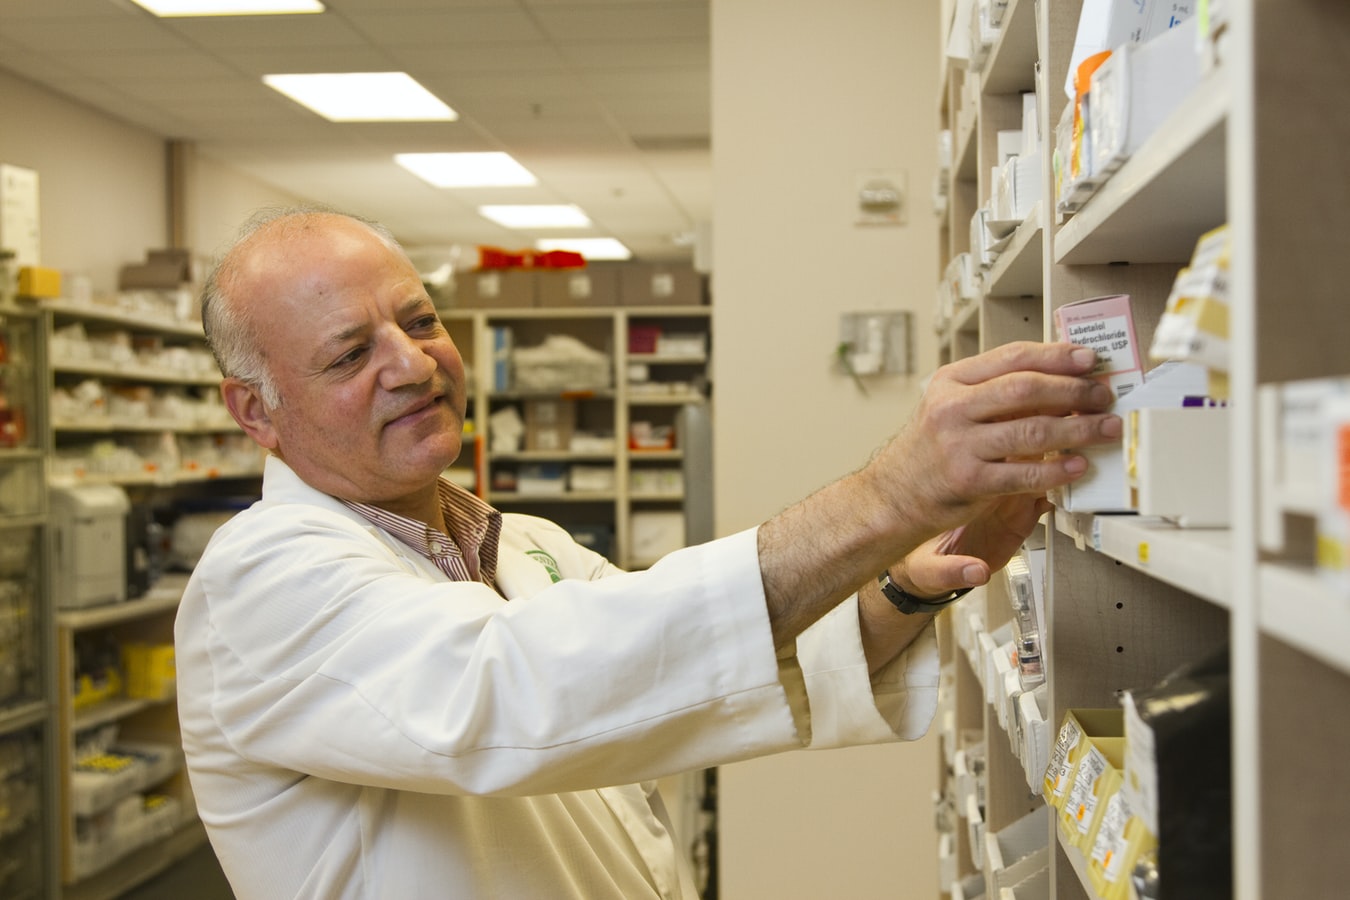 A pharmacist grabbing a paxil prescription for a patient